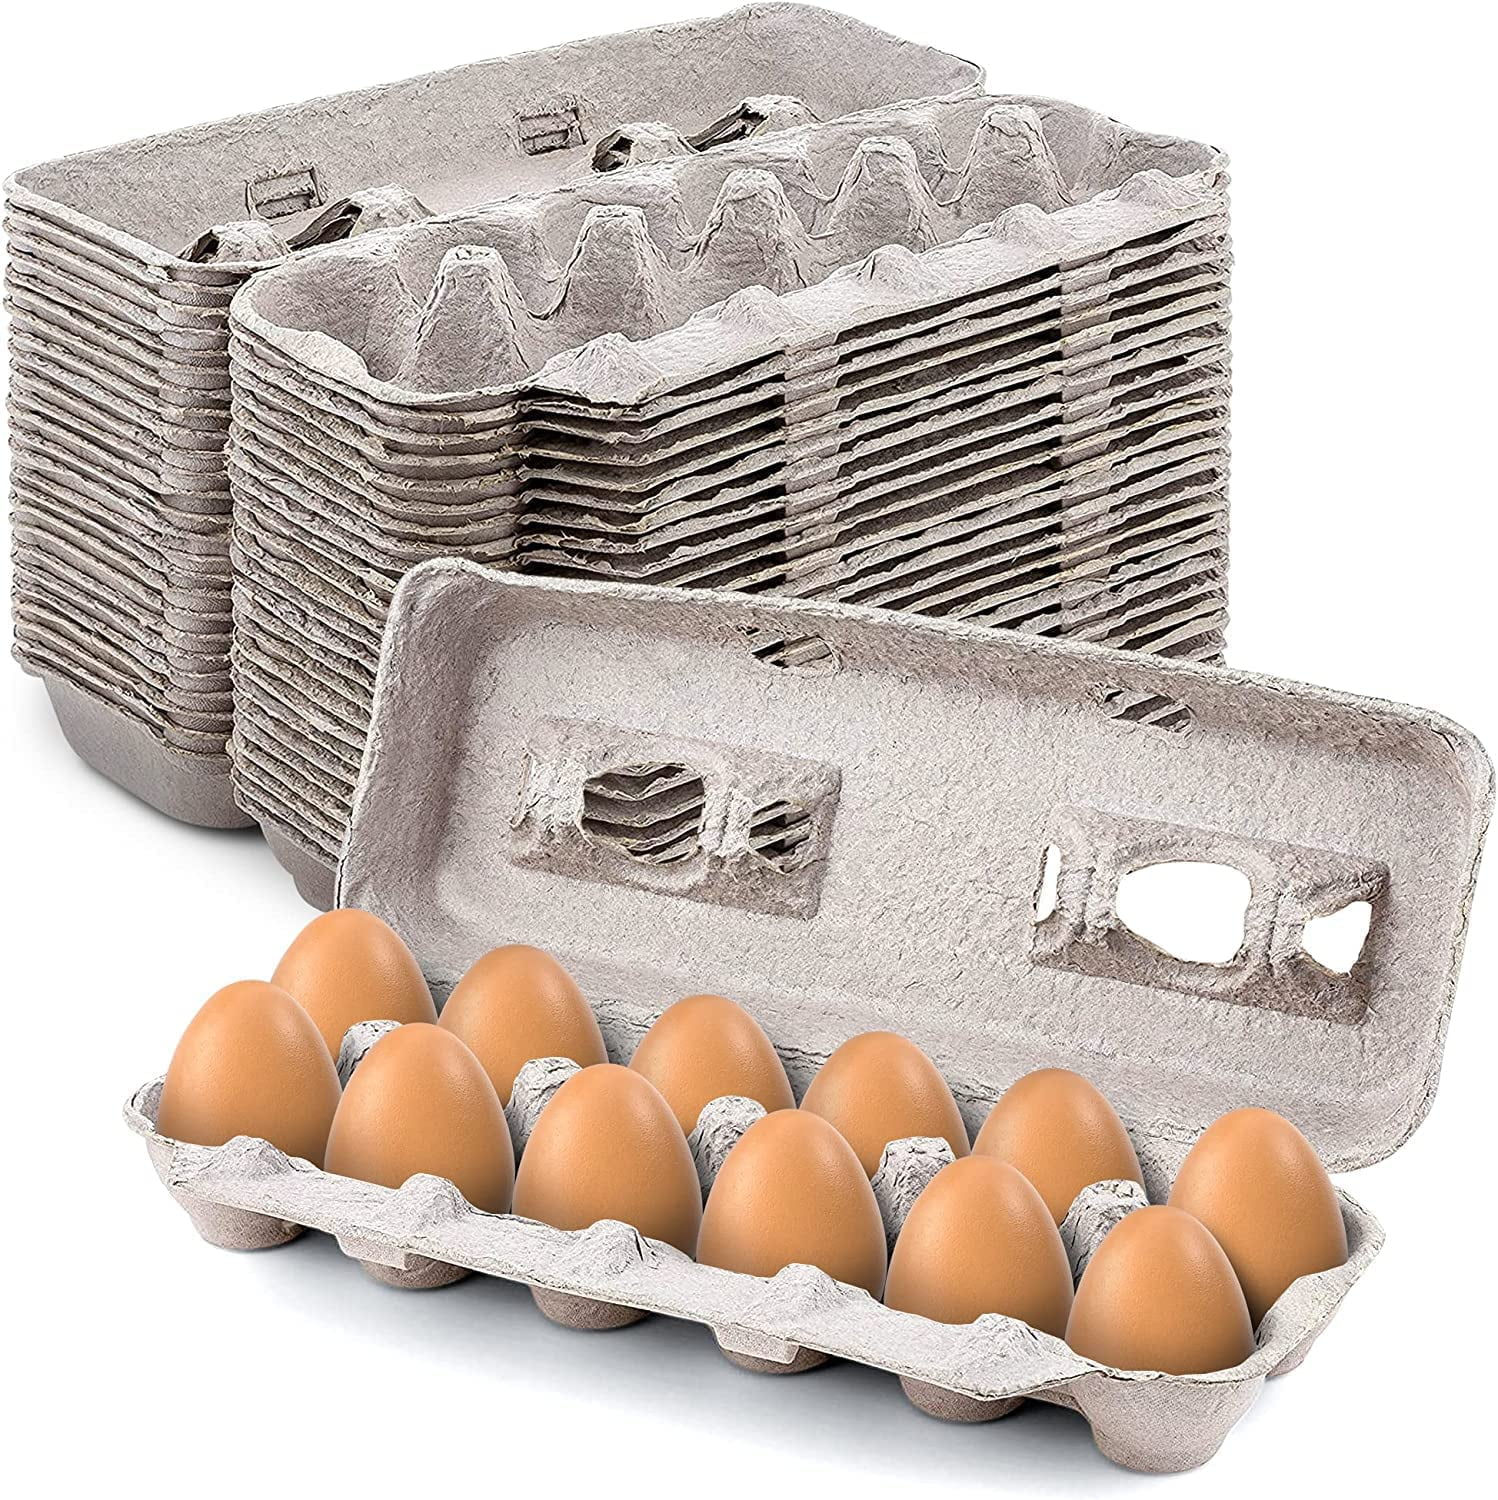 Polychromatic Kitchen Accessories : Half-Dozen Egg Crate